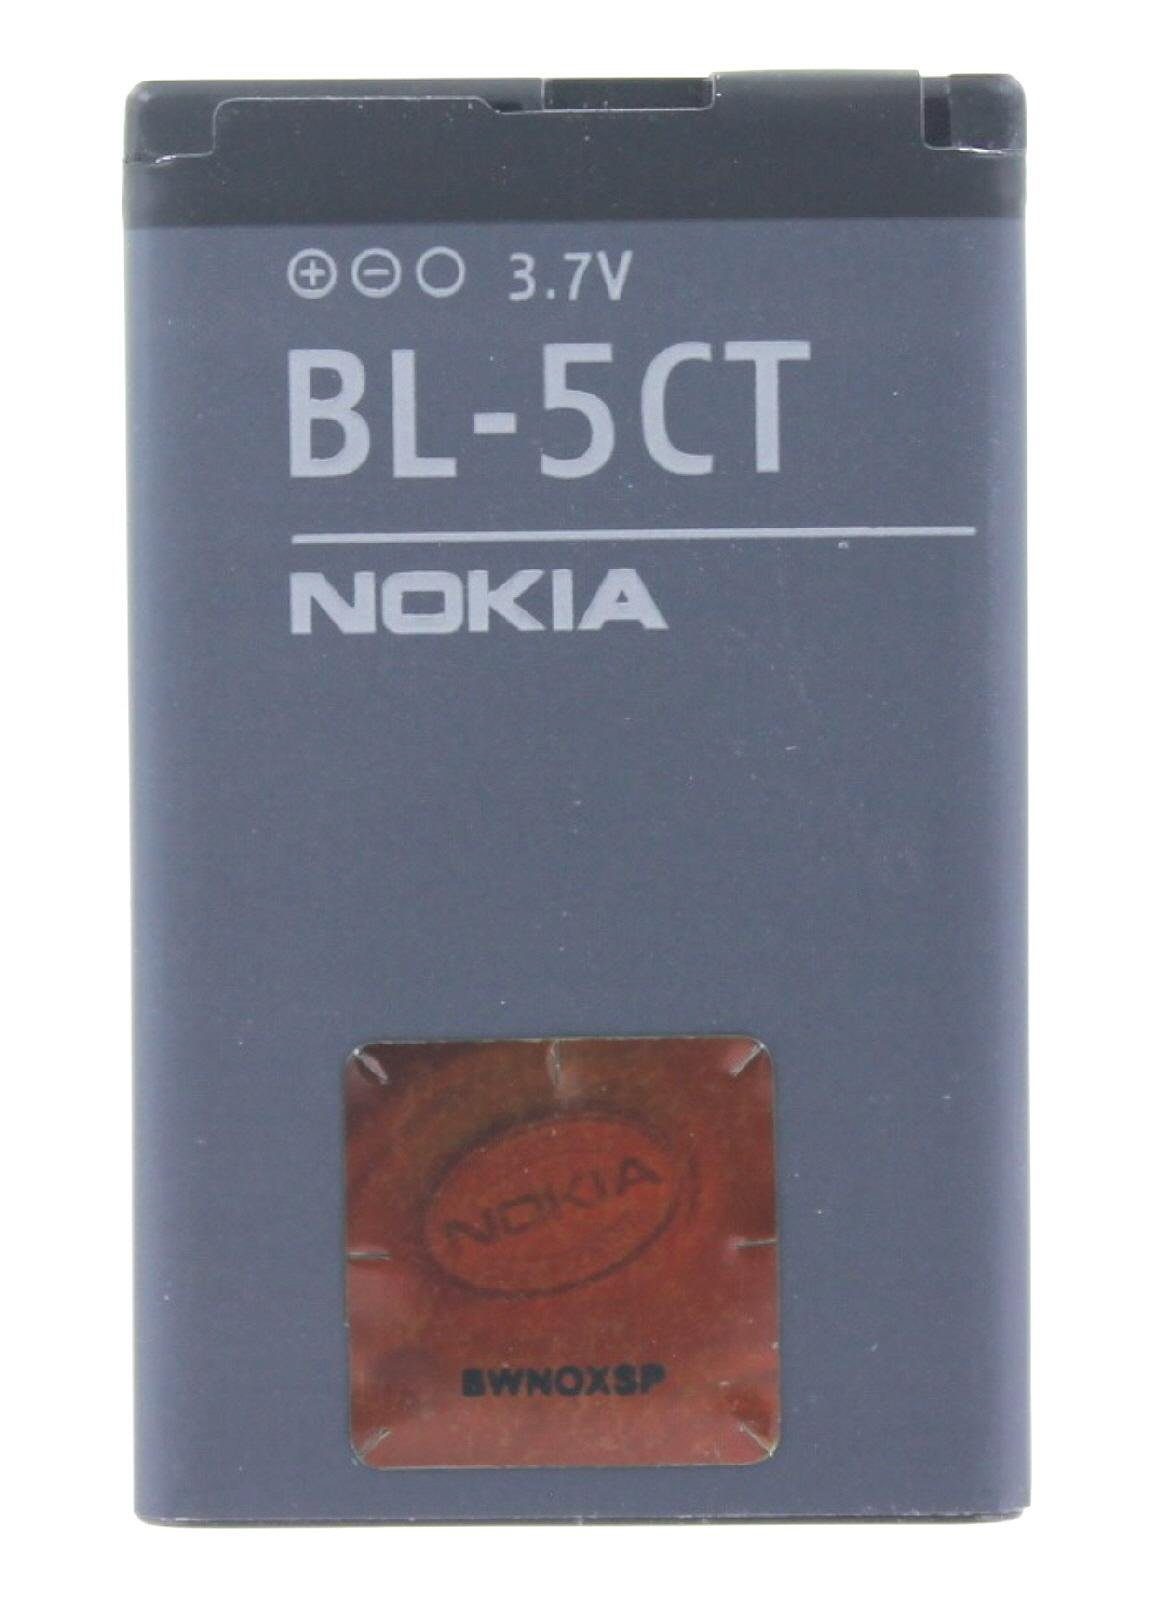 Nokia Original Akku für mAh 1050 Nokia Akku Akkupacks RM-443